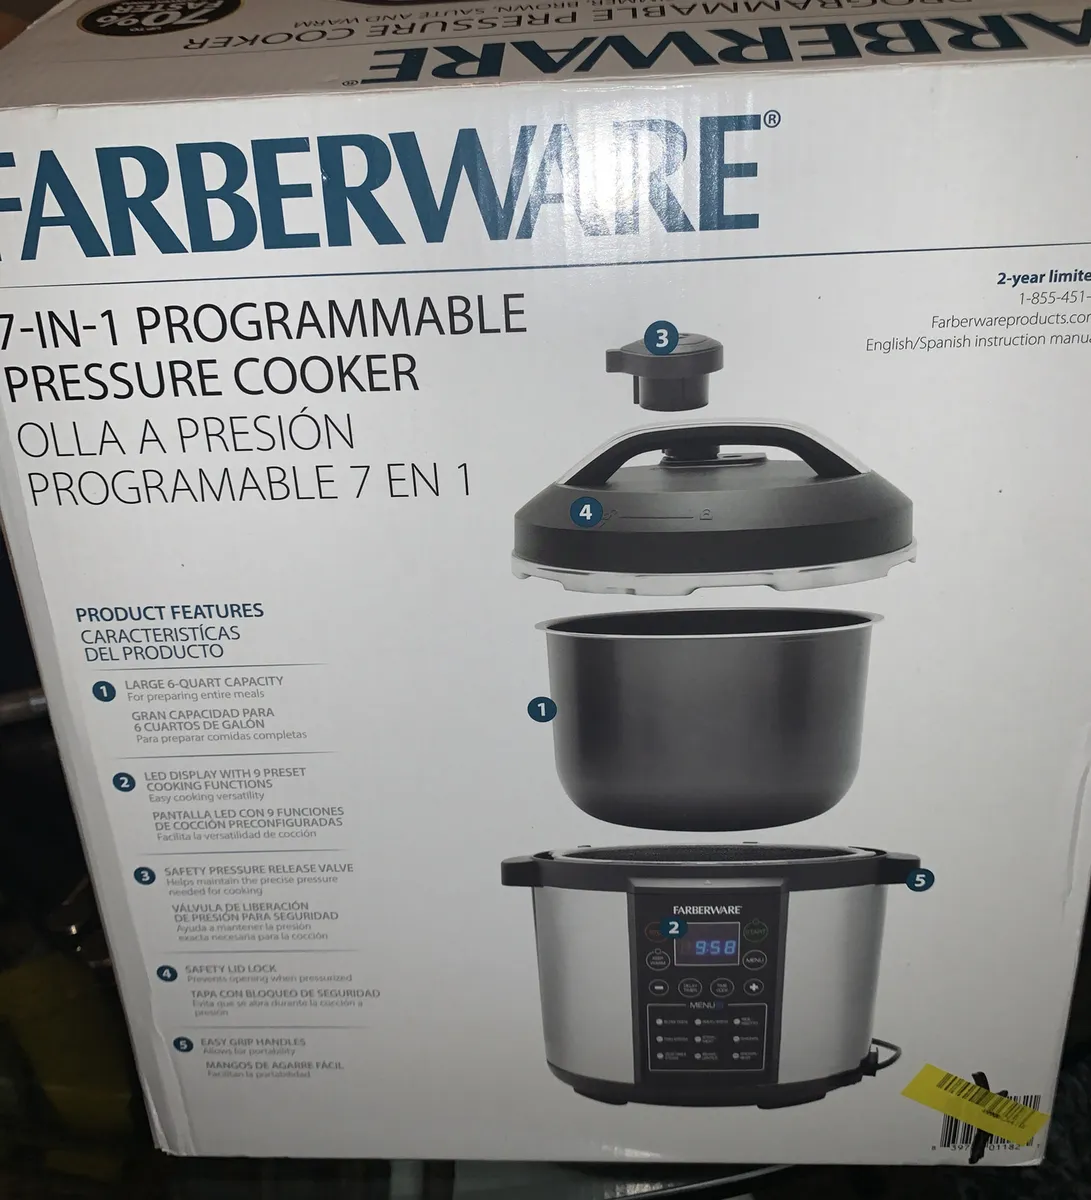 Farberware 7-in-1 Programmable Pressure Cooker Model WM-CS6004W